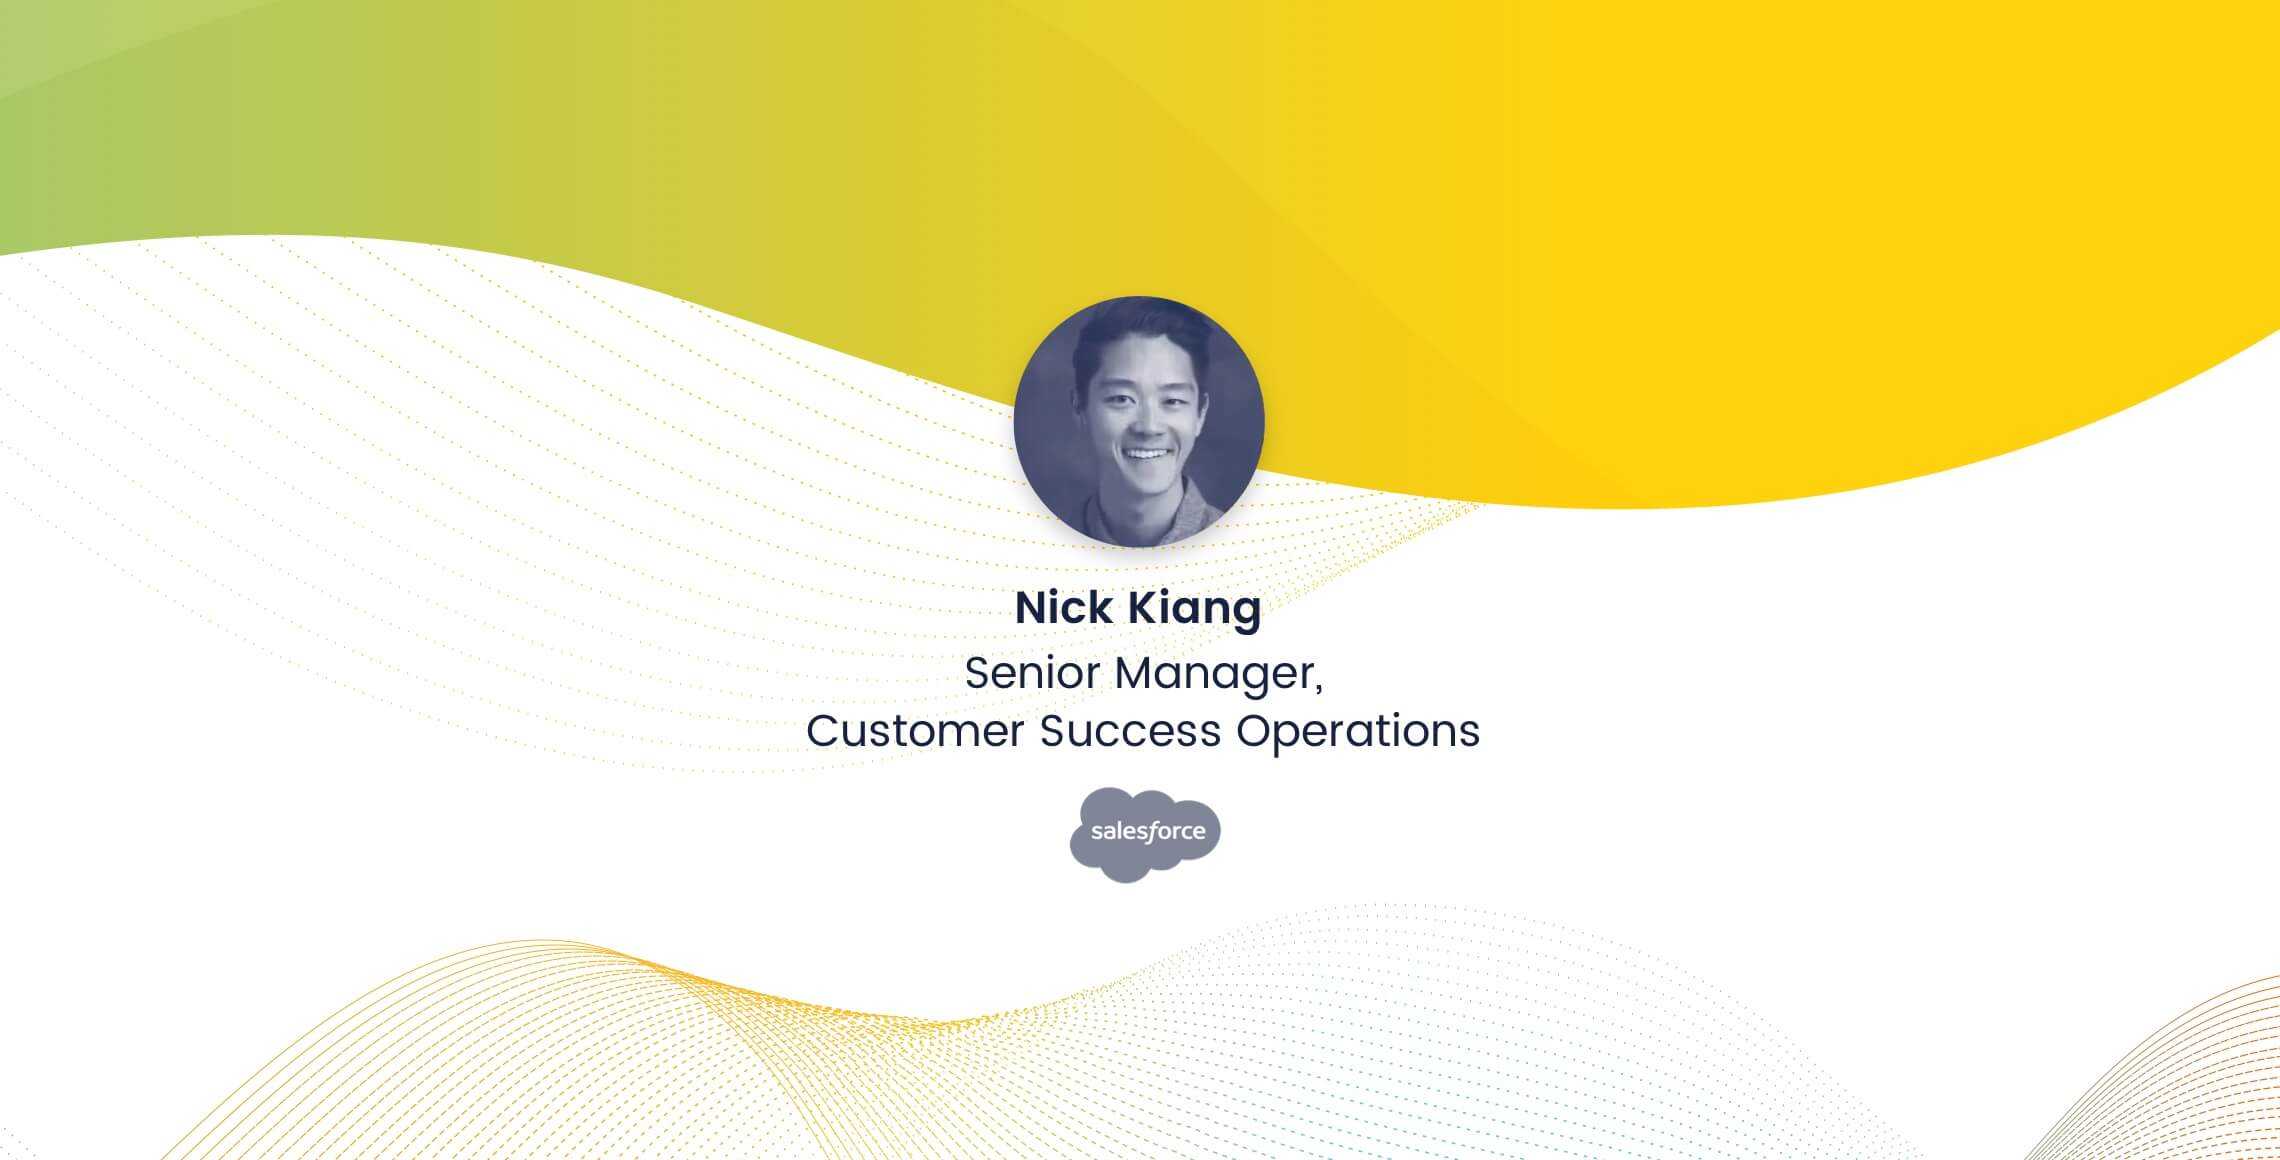 Nick Kiang, Senior Manager, Customer Success Operations, Patient Pop